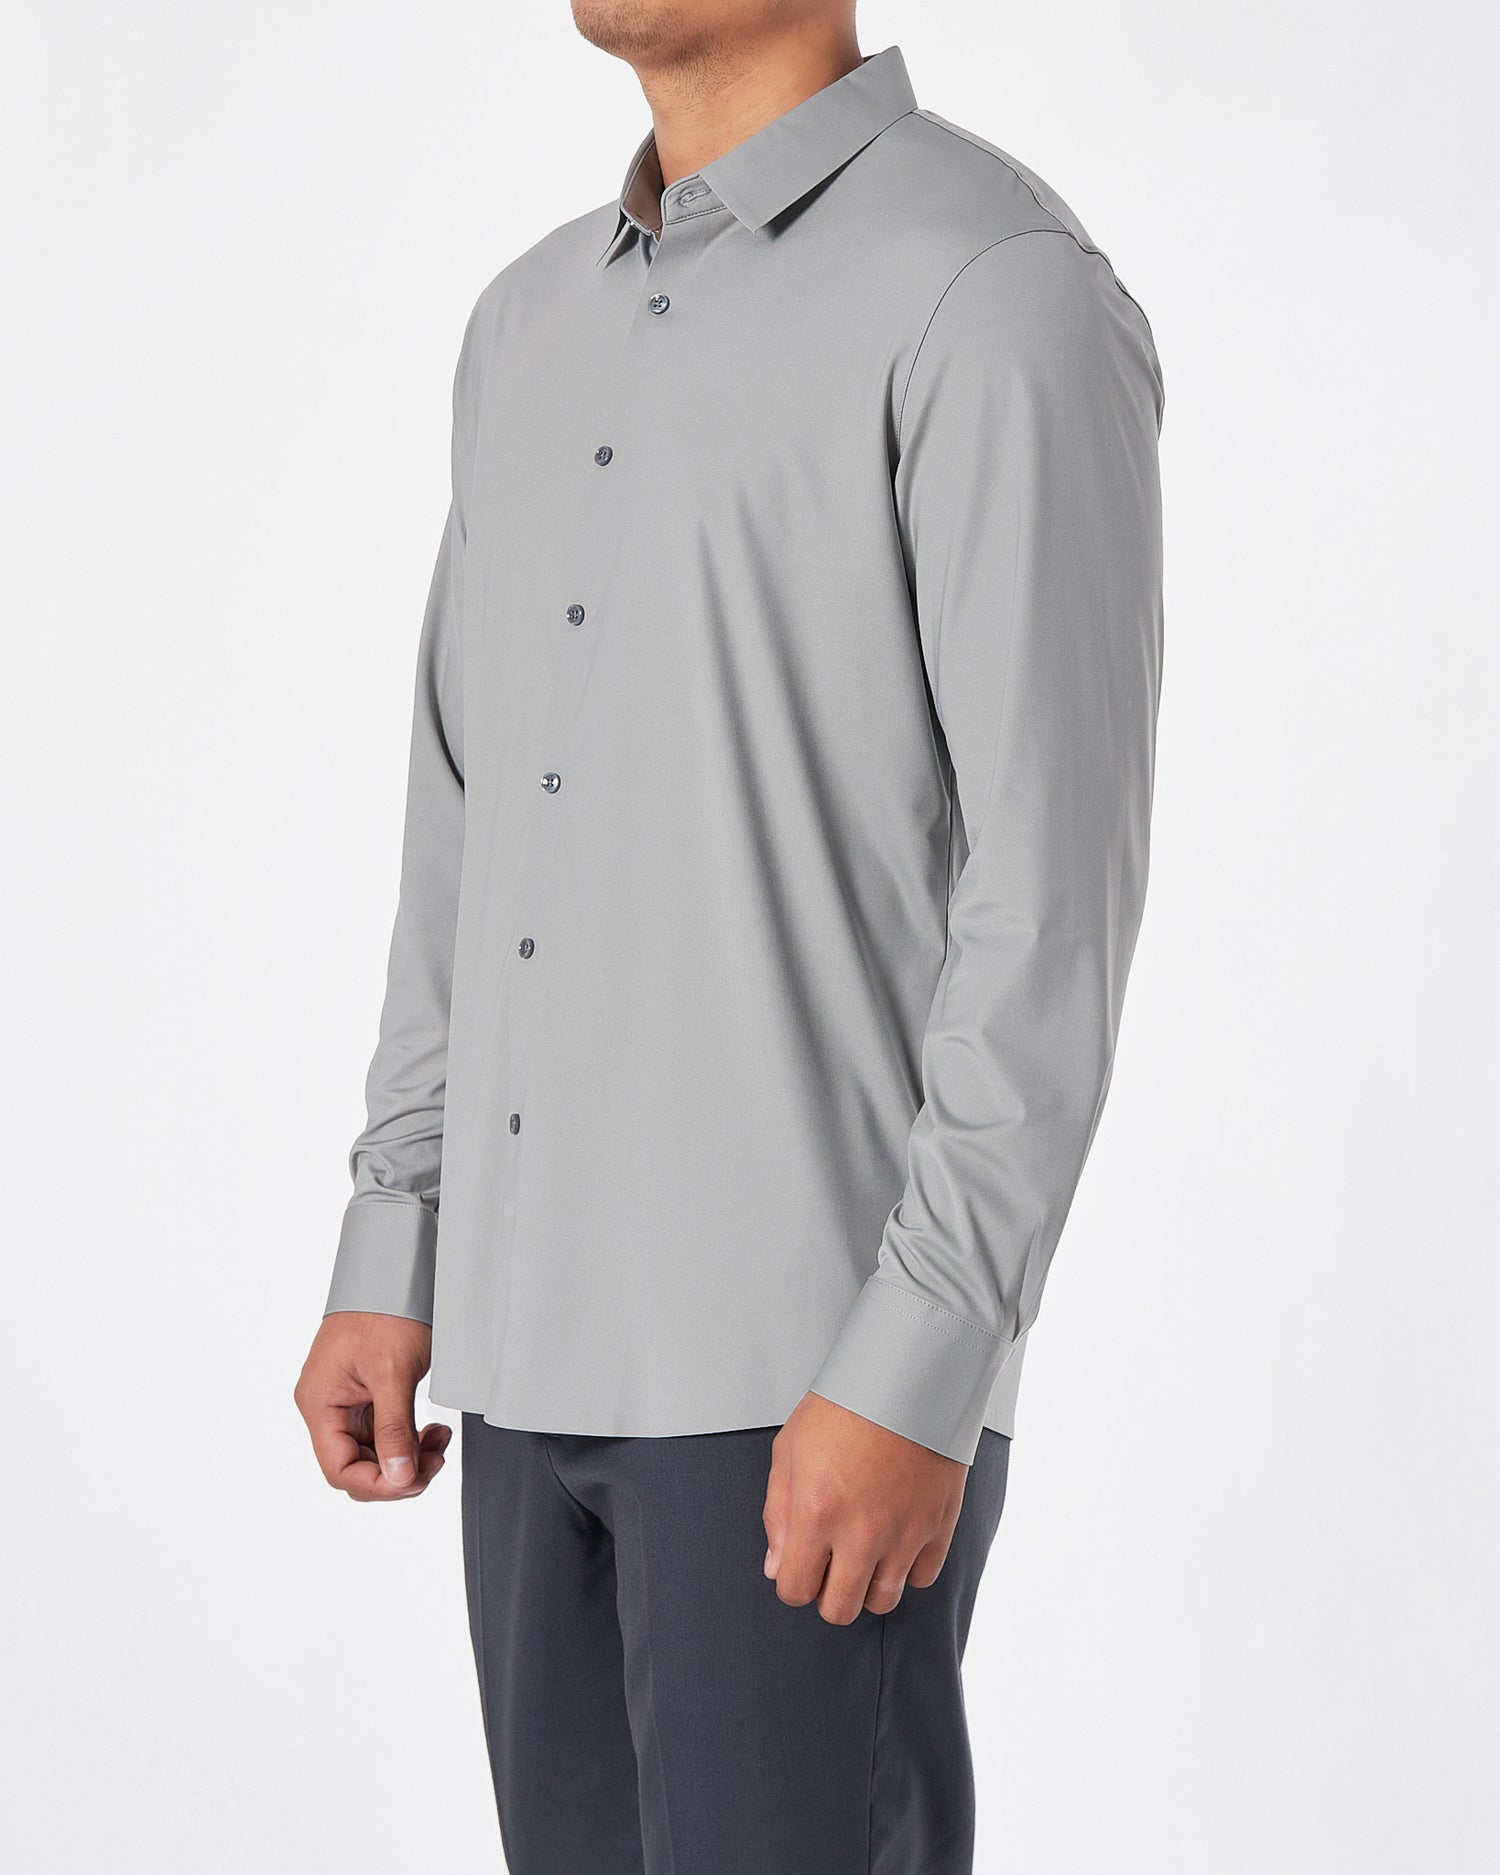 NK Stretchable Men Grey  Shirts Long Sleeve 24.90